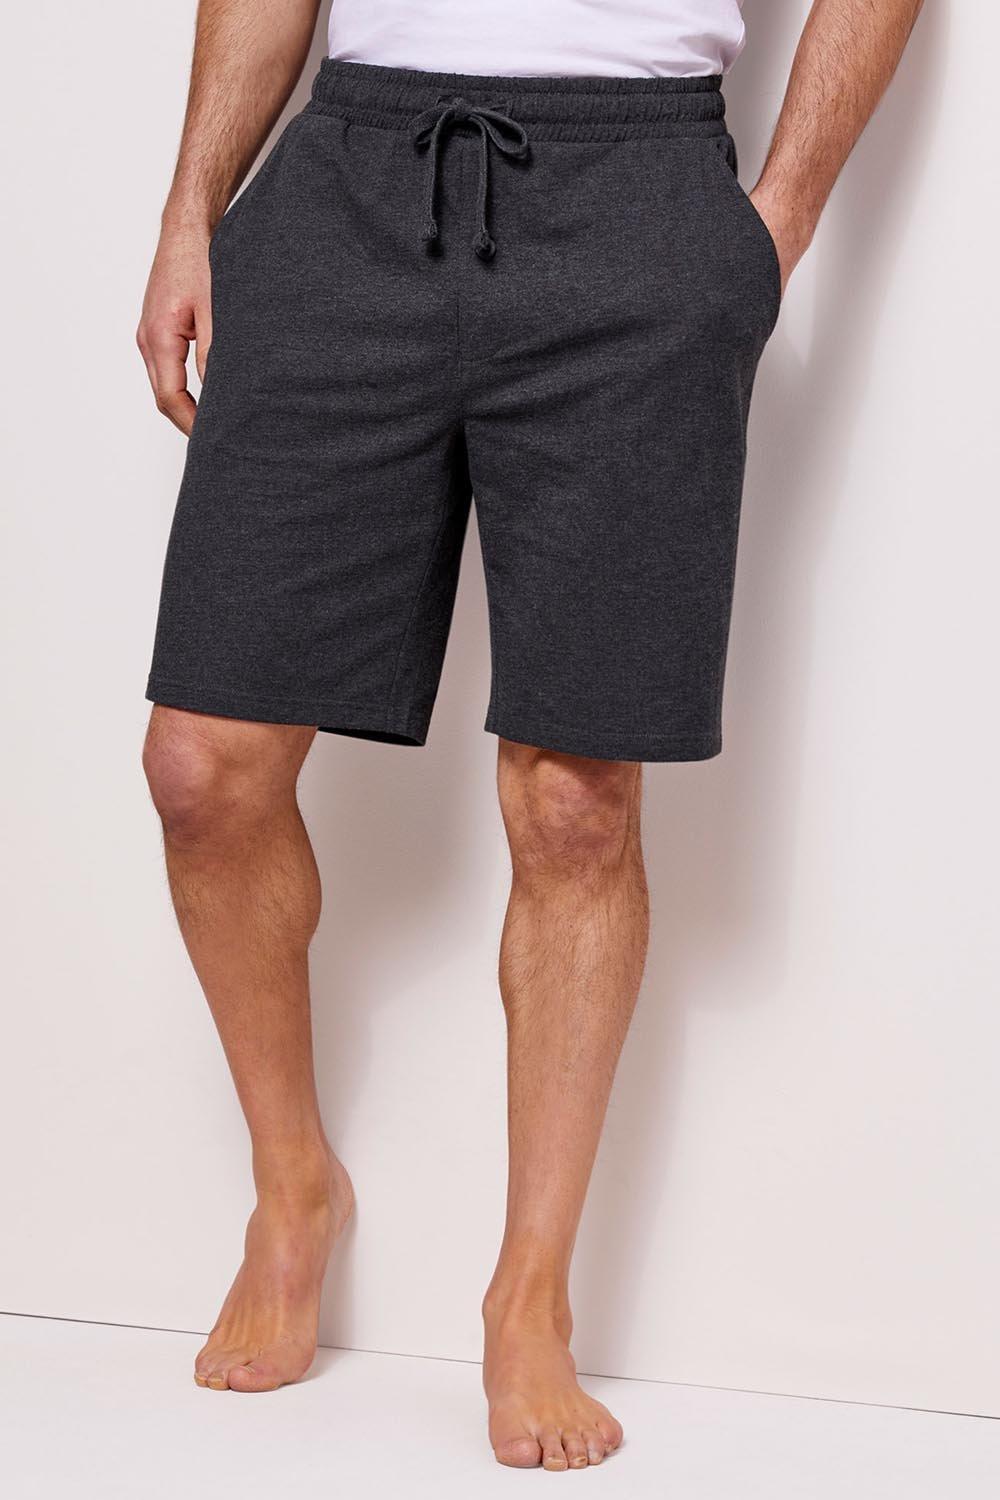 2 Pack Loungewear Shorts 9" (23cm) inside leg